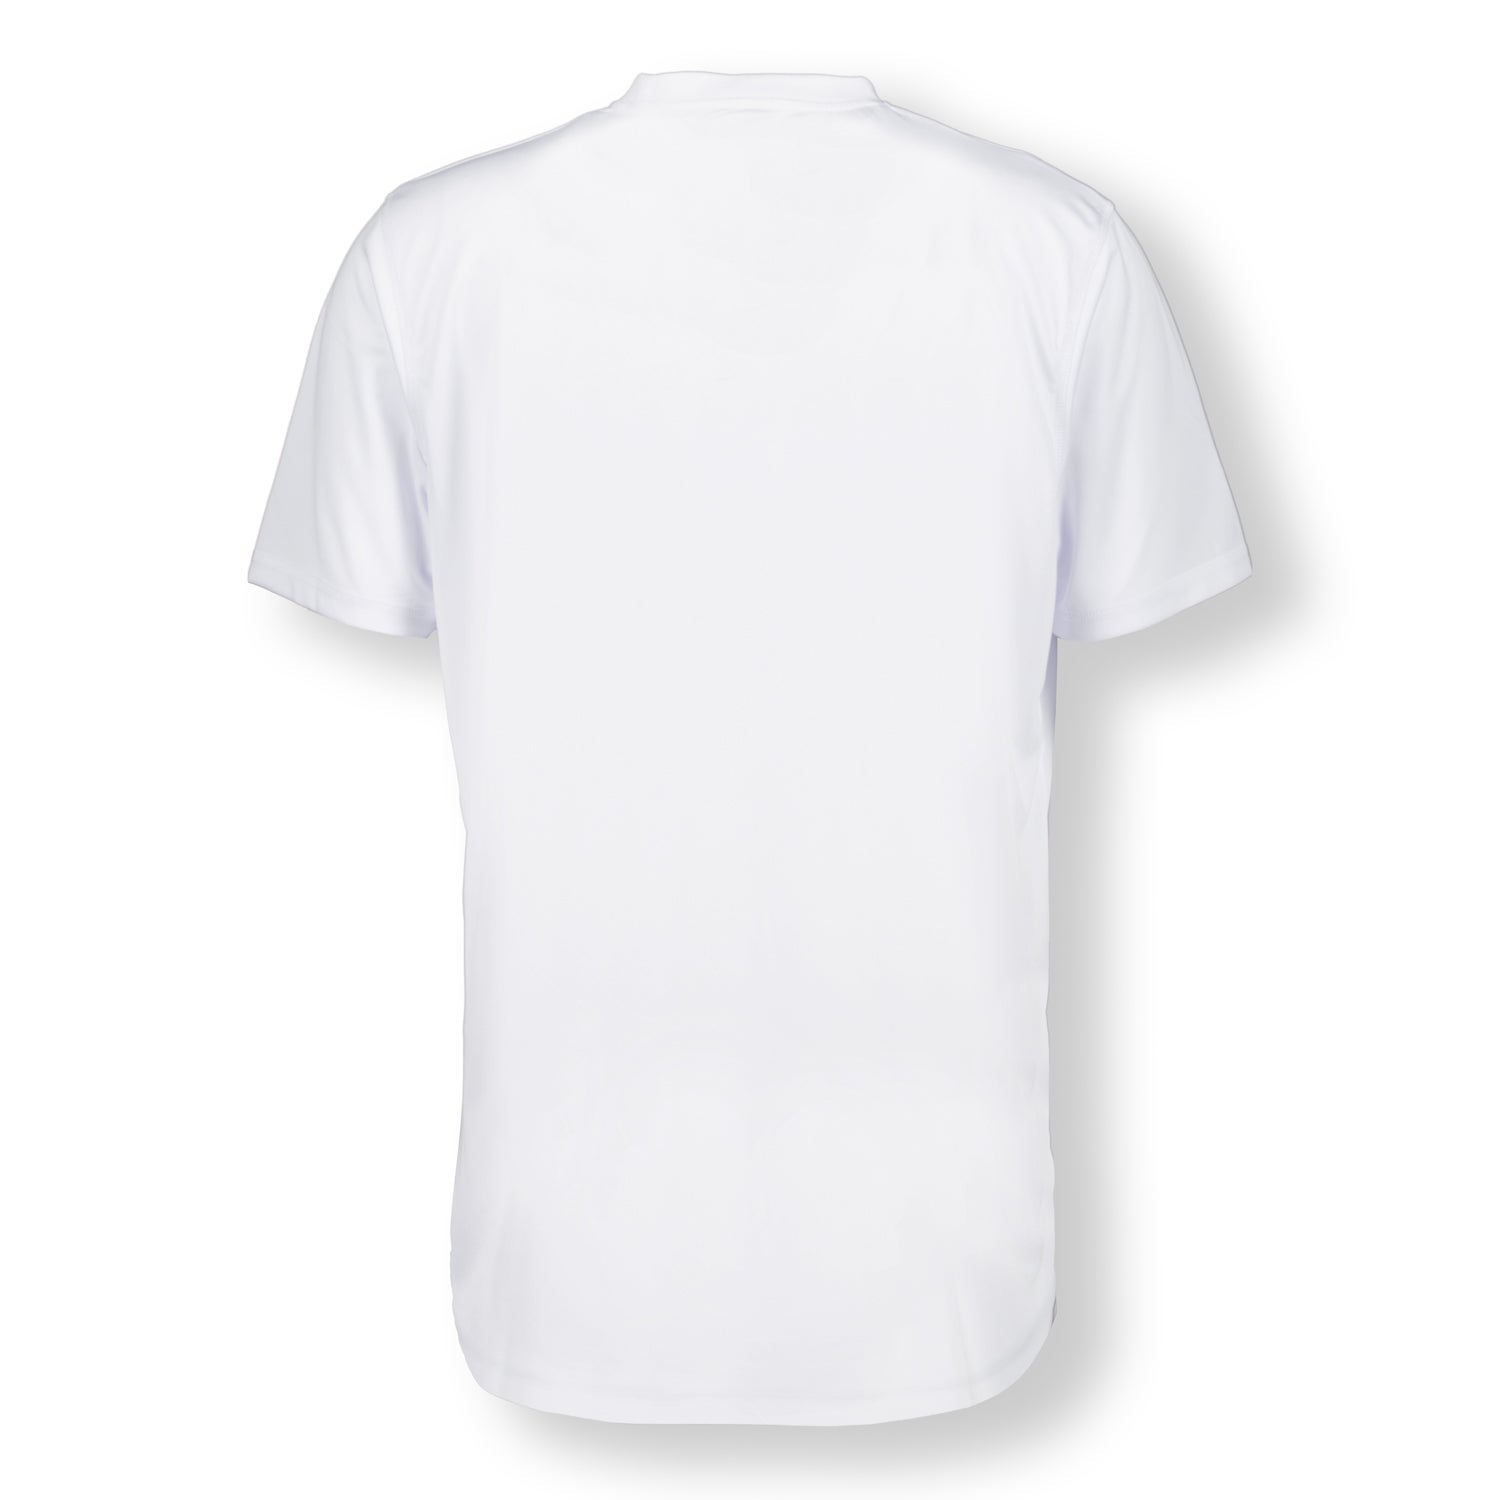 Camiseta Basic Hombre Blanca